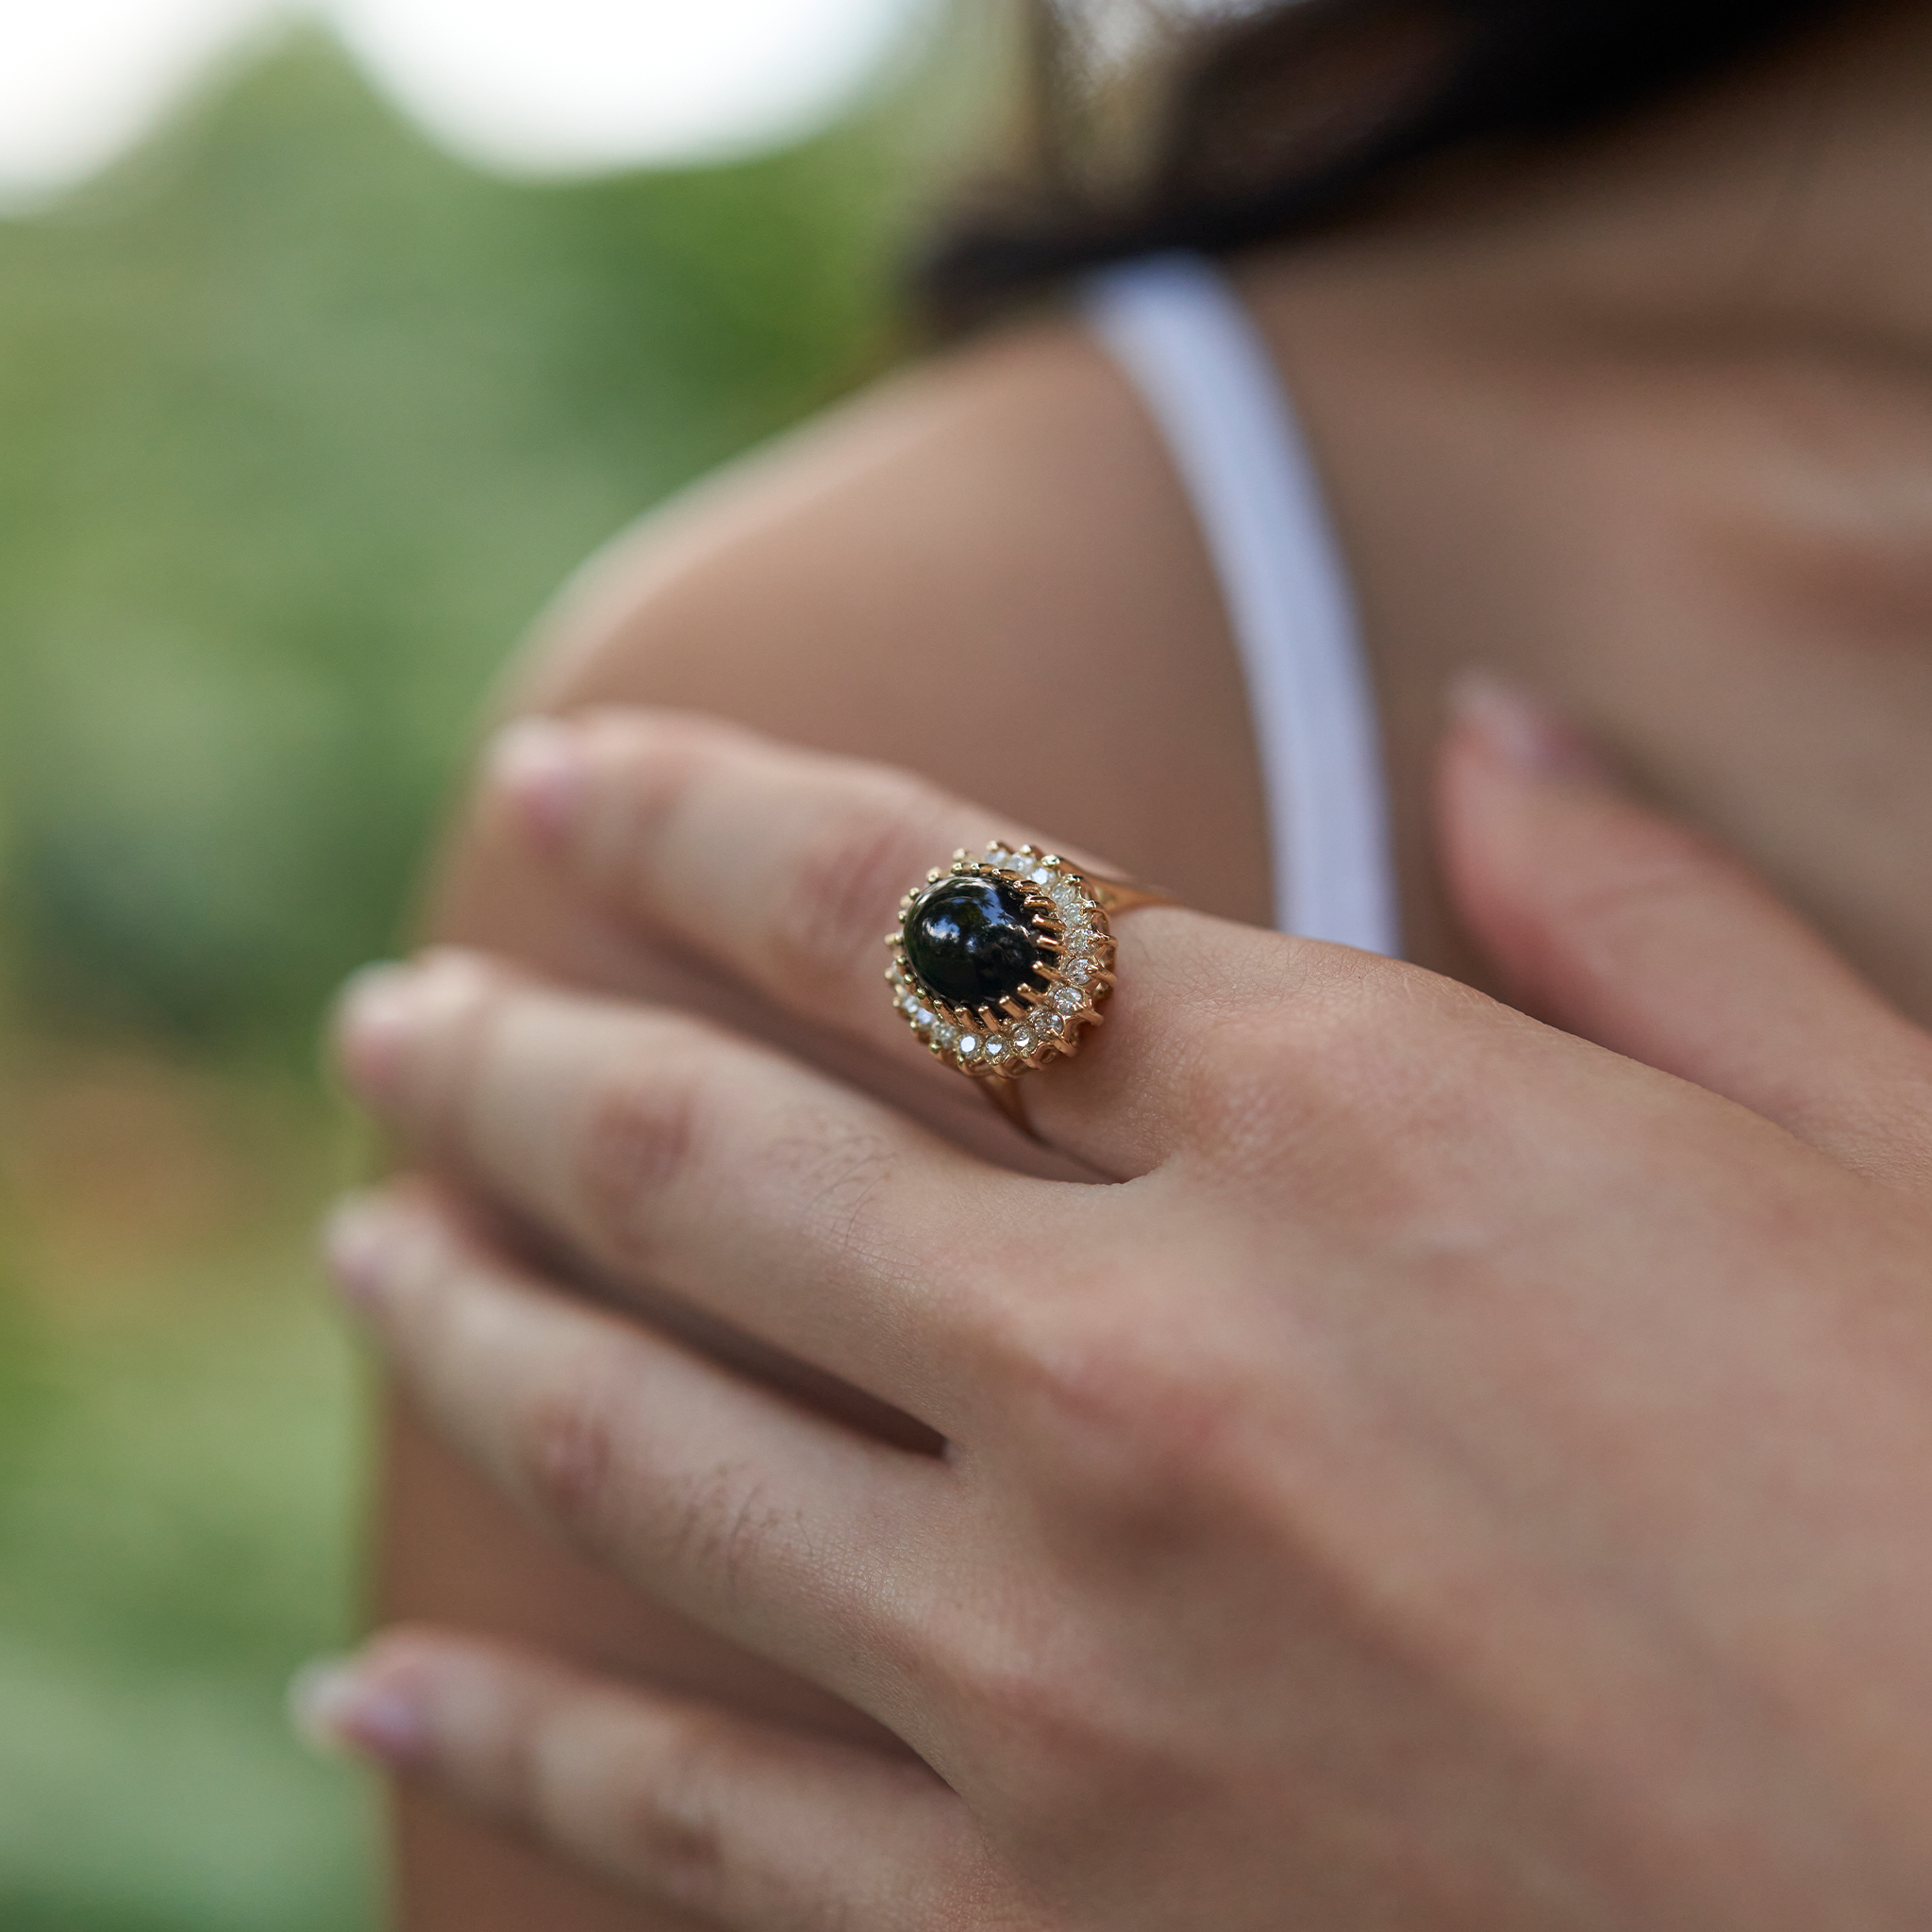 Princess Ka‘iulani Black Coral Ring in Gold with Diamonds - 11mm